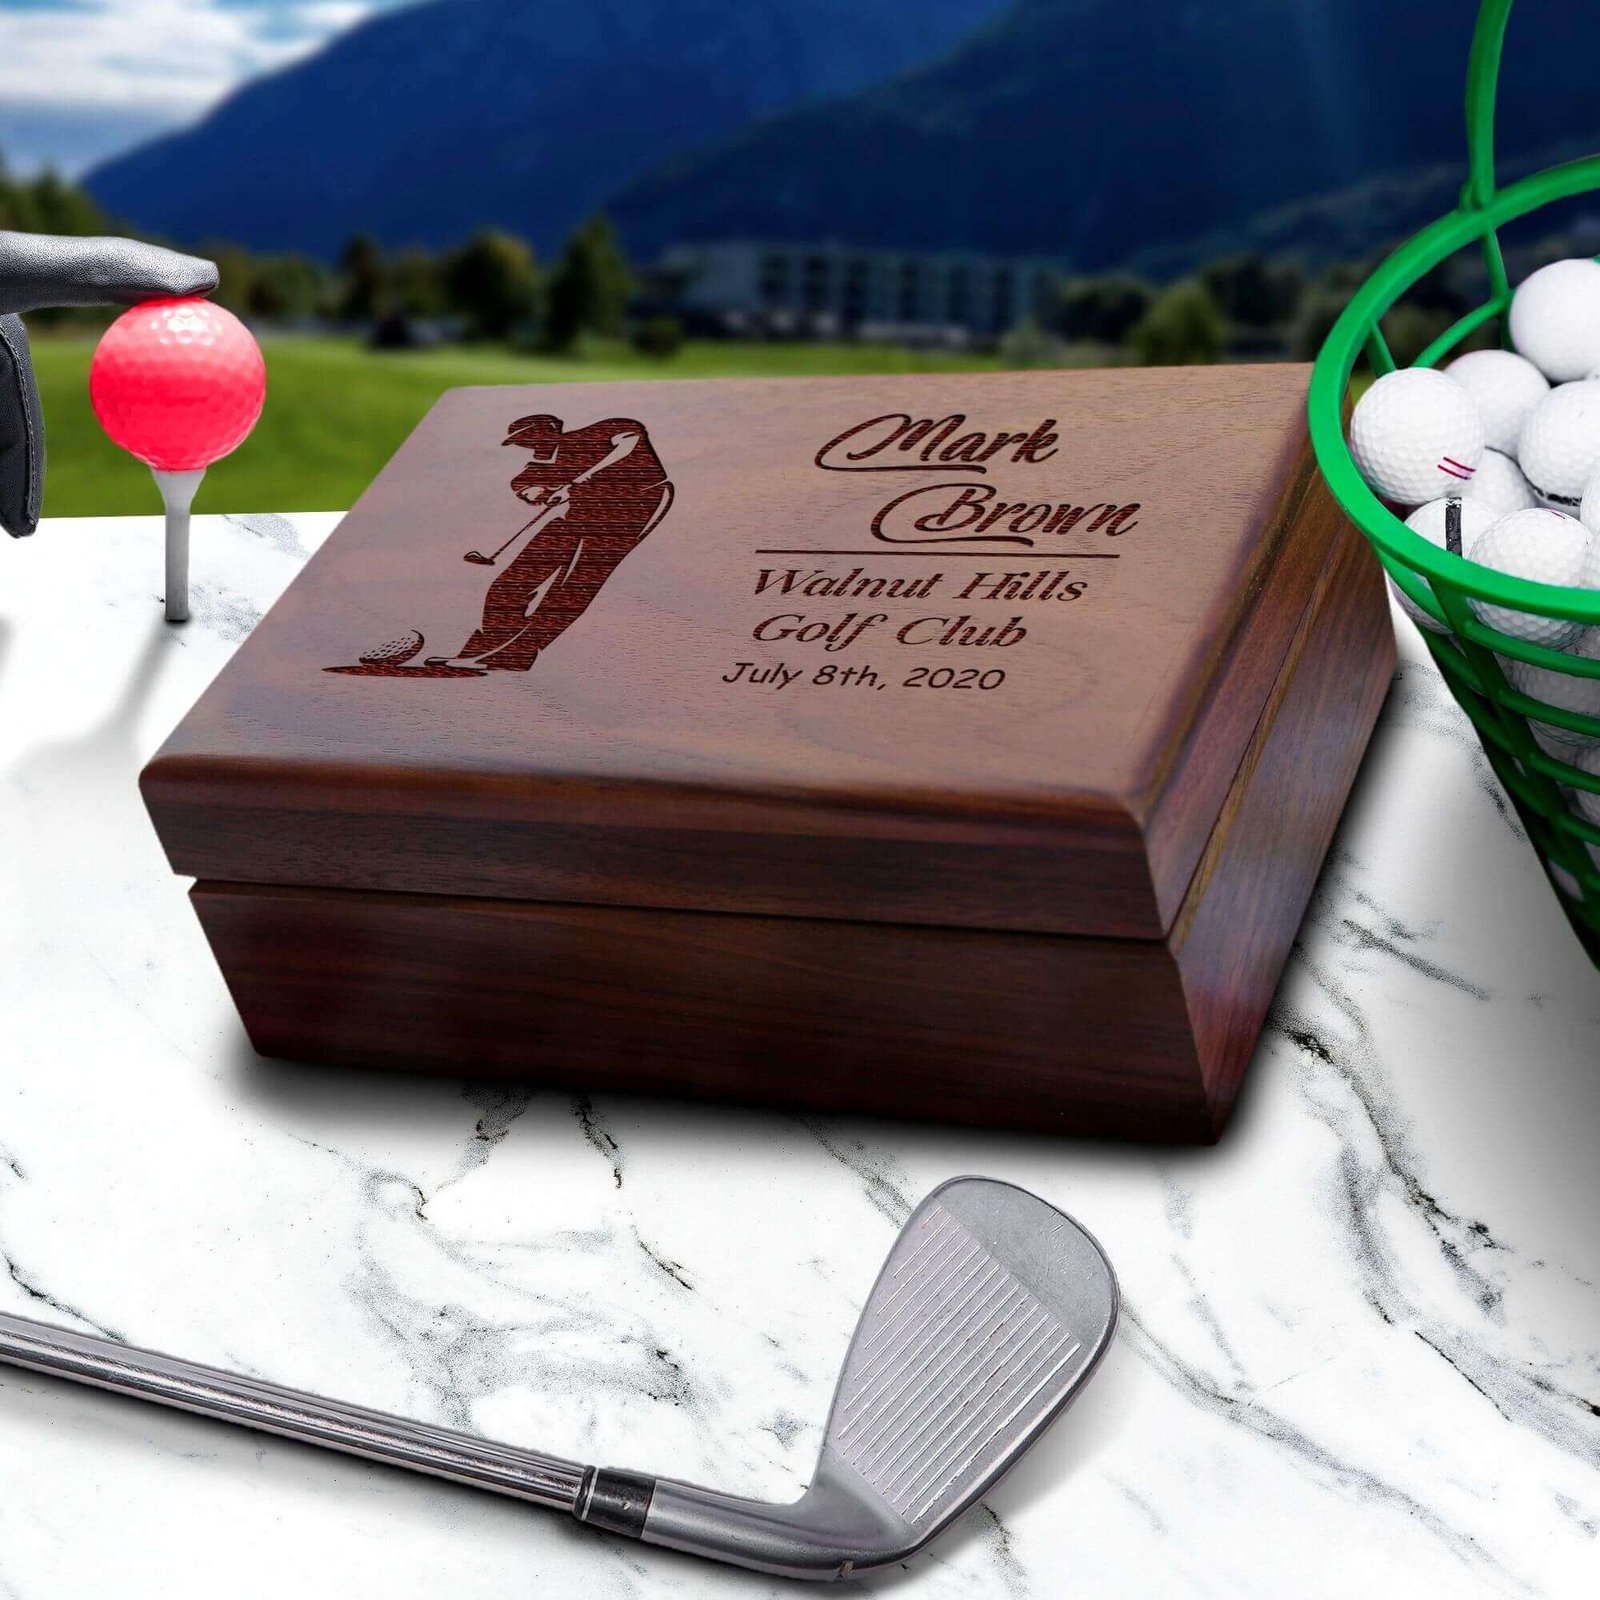 https://www.asperadesign.store/wp-content/uploads/2022/01/1.-Unique-Golf-Gifts-Inspiring-Ideas-for-Men-in-Carved-Wooden-Boxes-Aspera-Design.jpeg